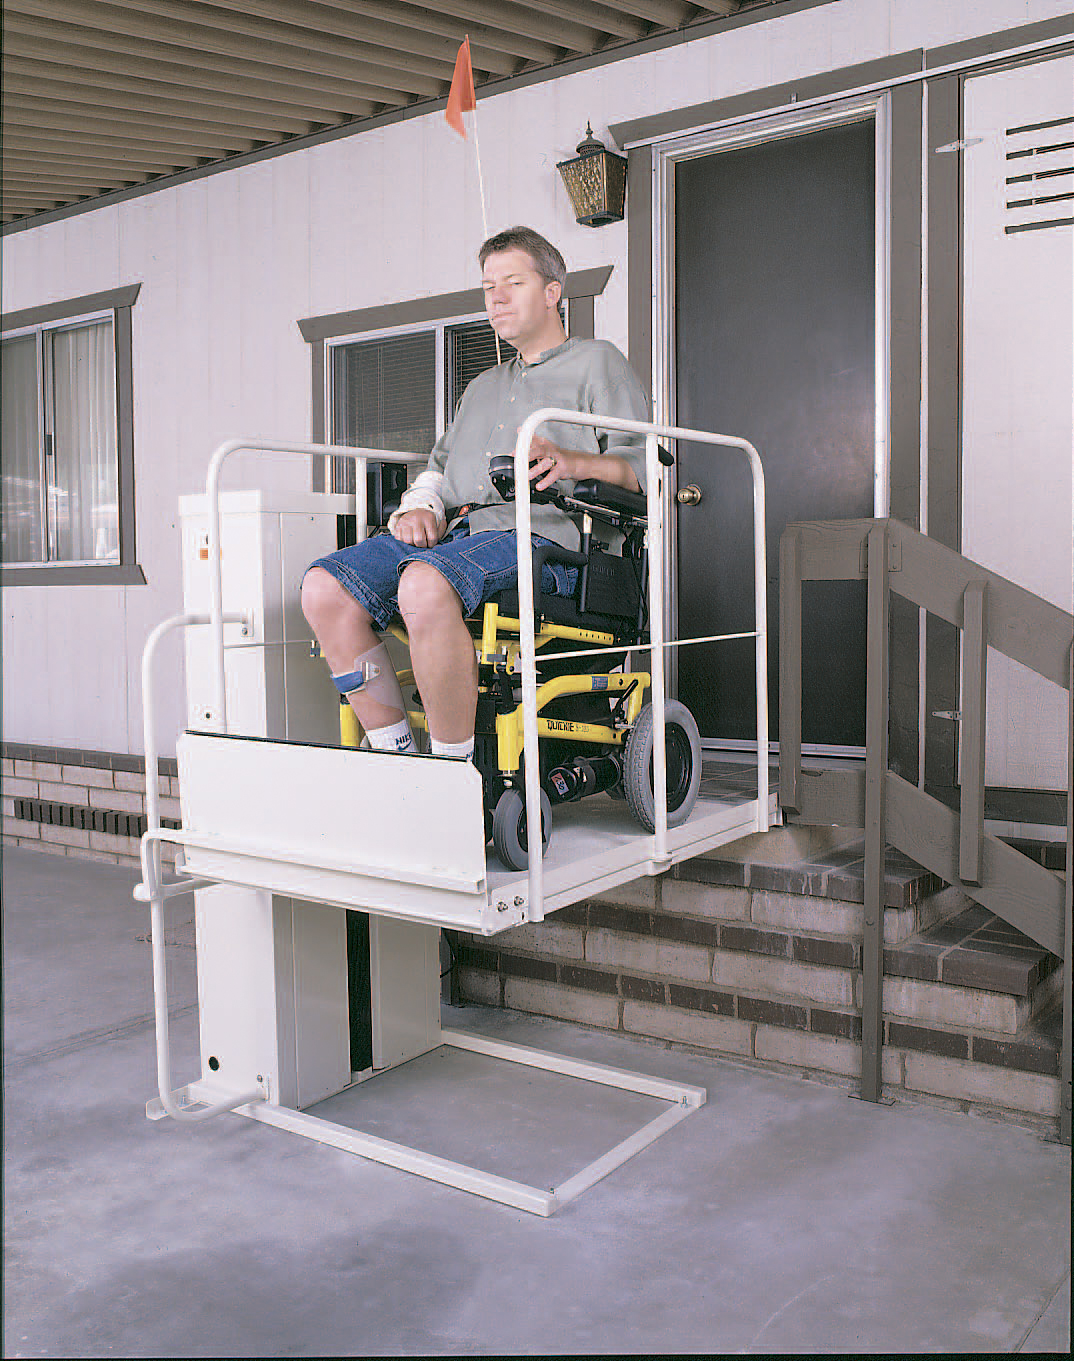 East Valley wheelchair elevator vpl mobile home vertical platform